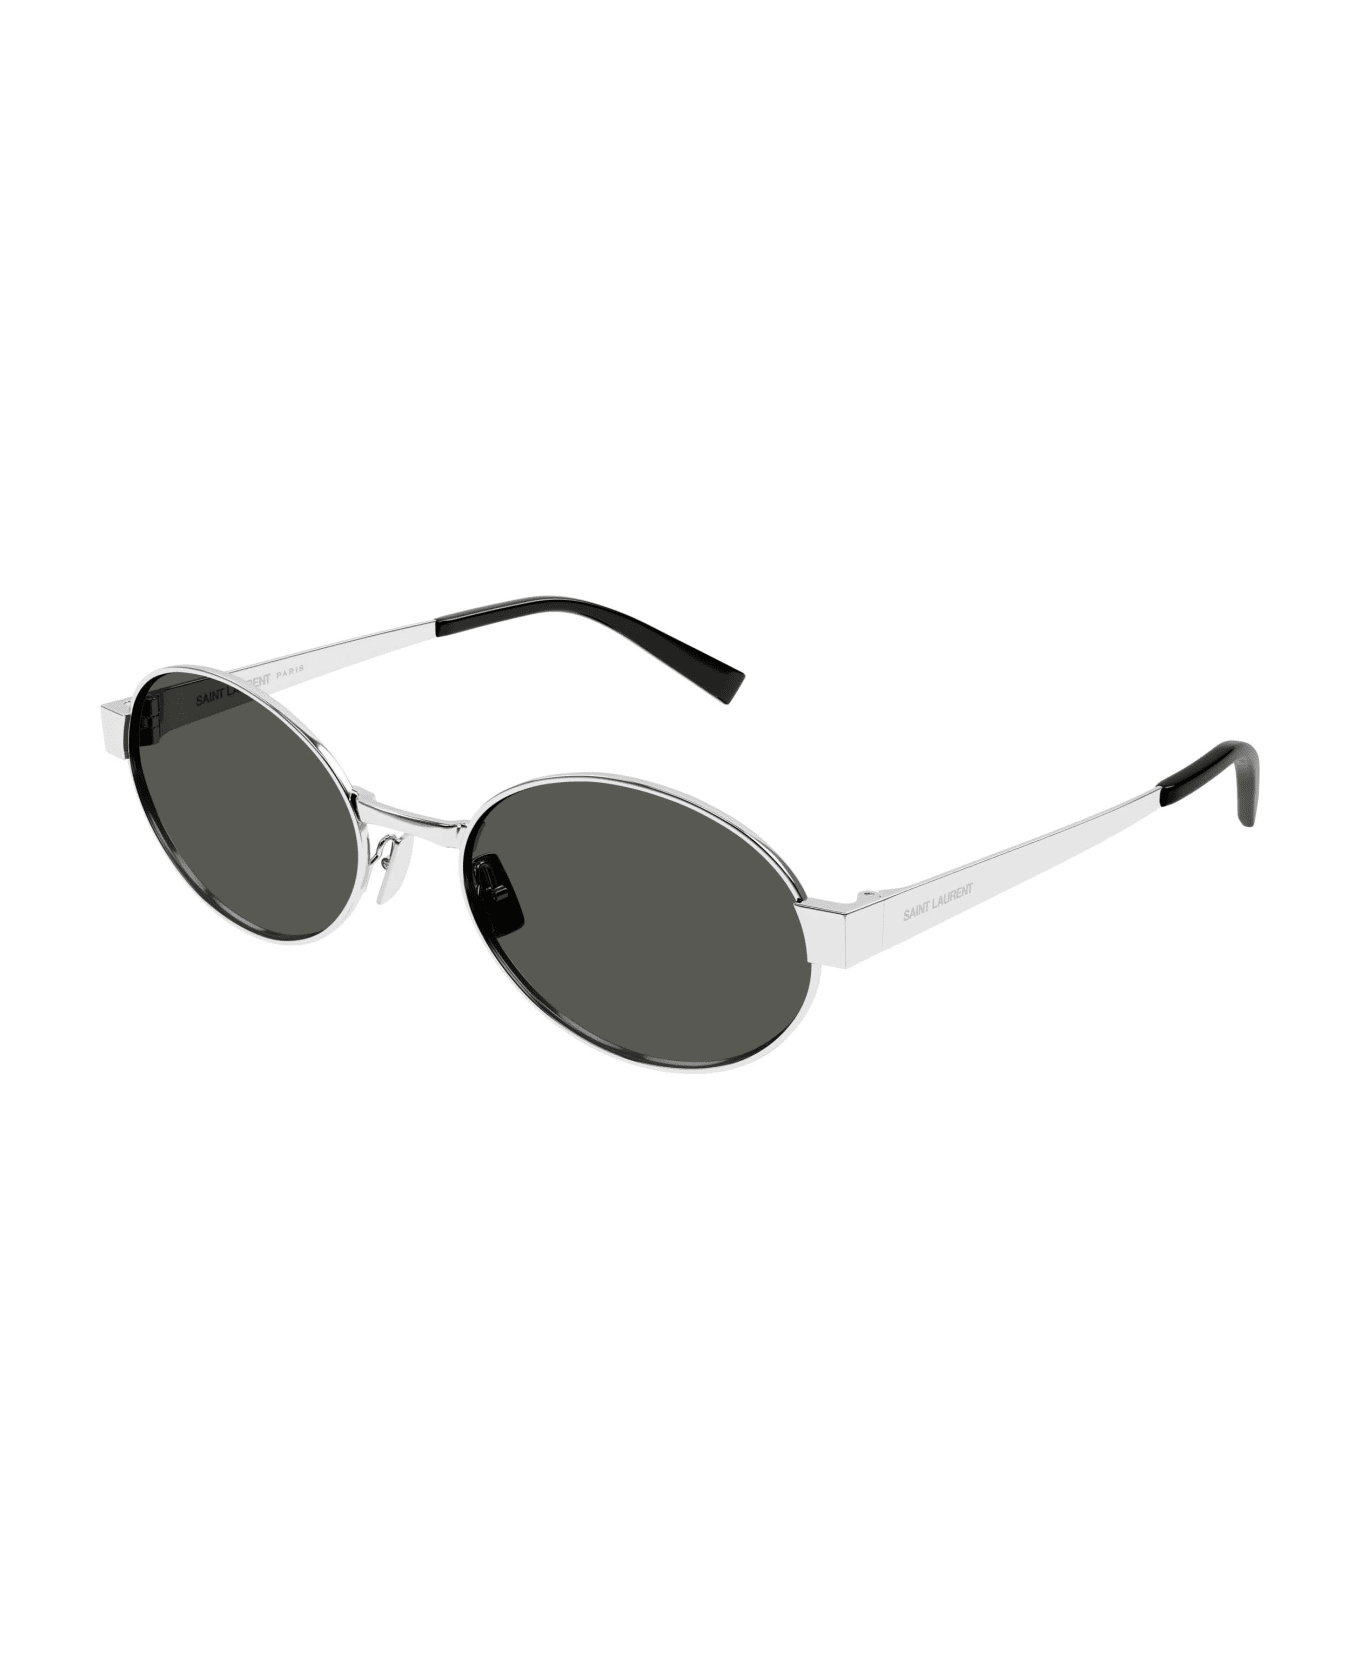 Saint Laurent Eyewear Sunglasses - Silver/Grigio サングラス